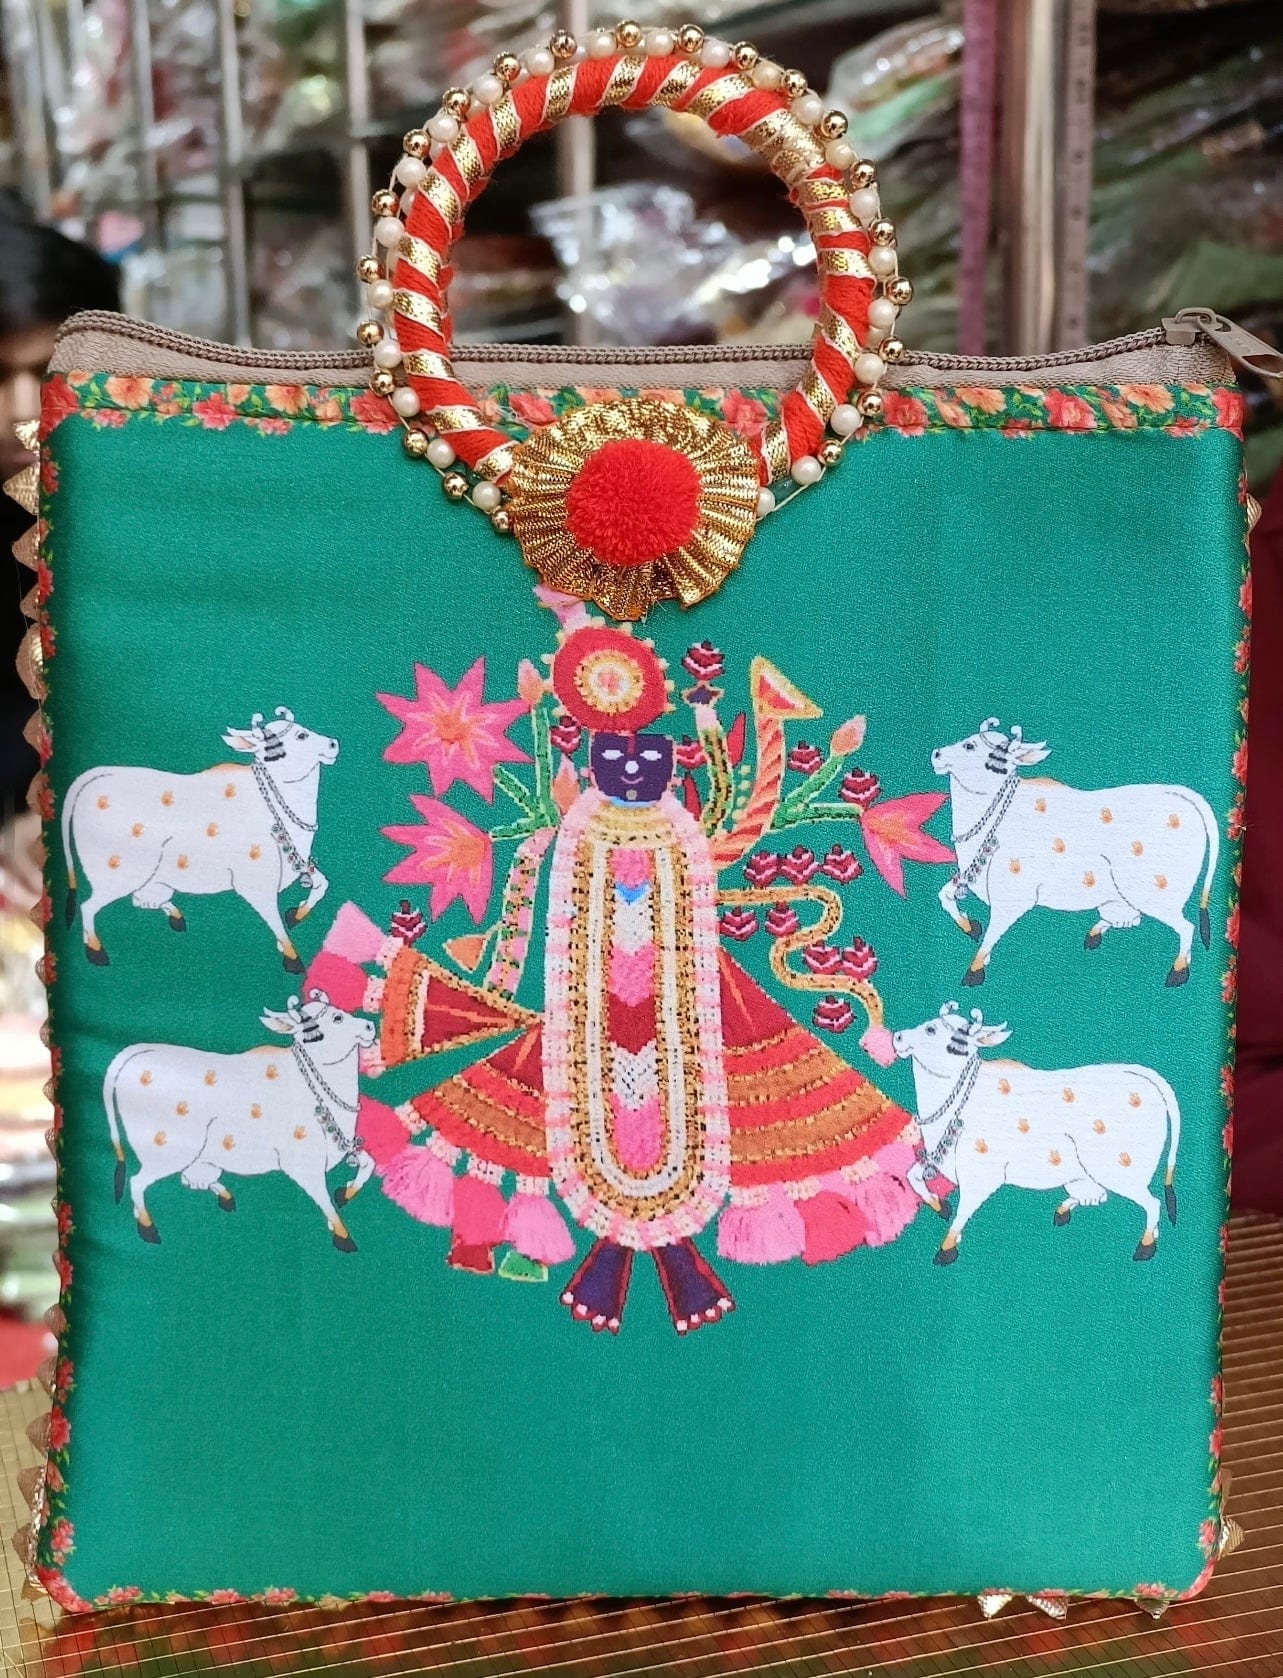 100 Rs each on buying 🏷in bulk | Call 📞 at 8619550223 Women's Potli Bag LAMANSH® Shreenath ji 🙏 hand bags for festival puja giveaways | Shrinath ji Print potli bags for return gifting in Wedding & Religious functions